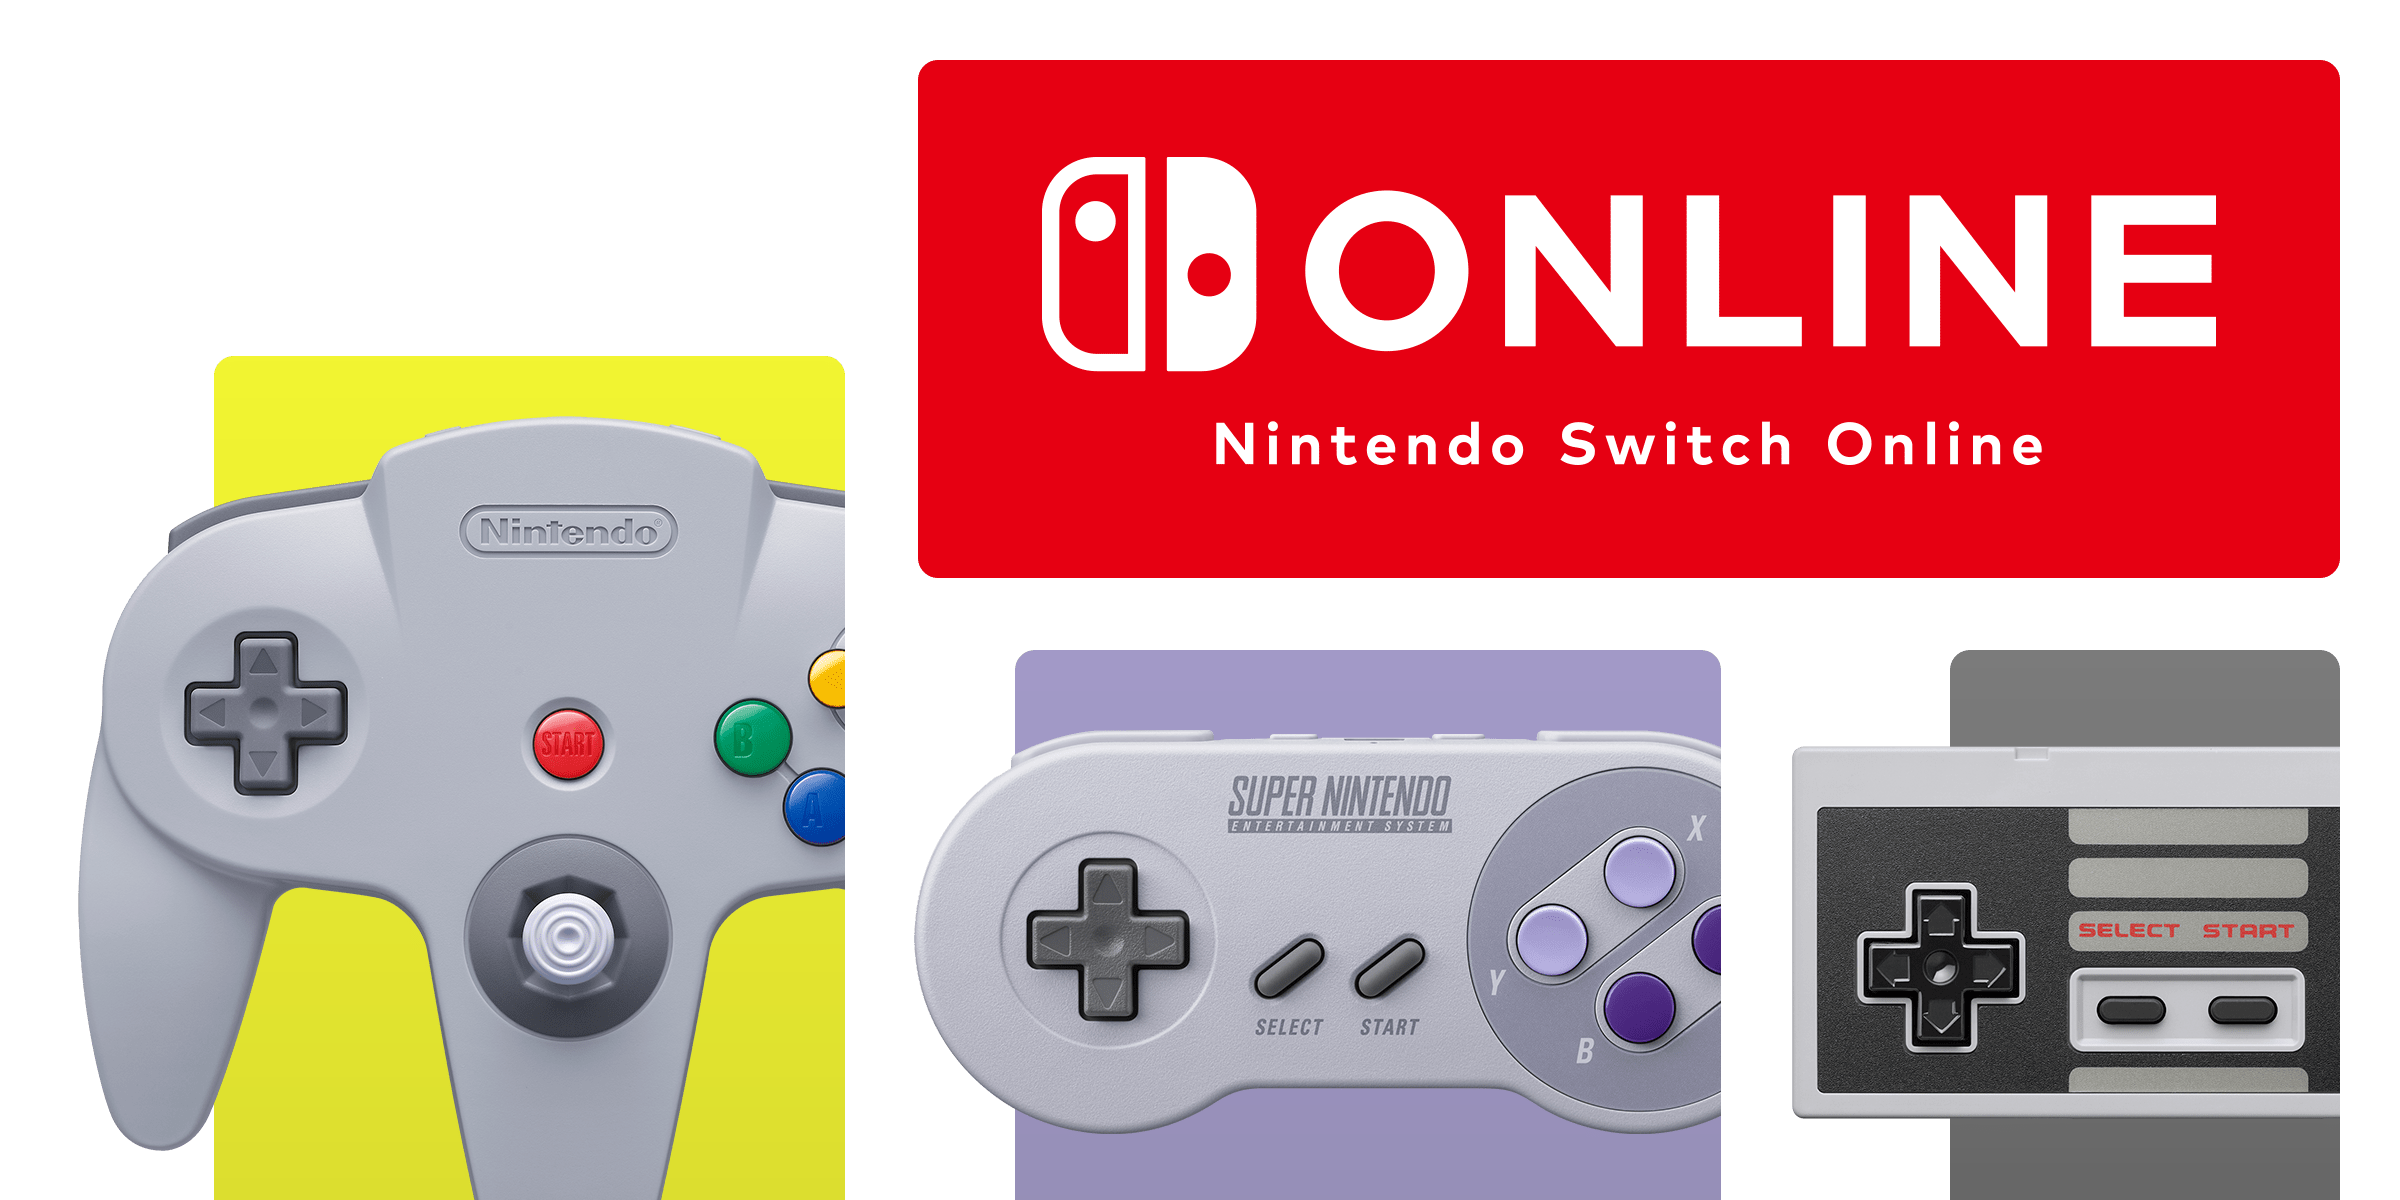 Nintendo Switch Online offers